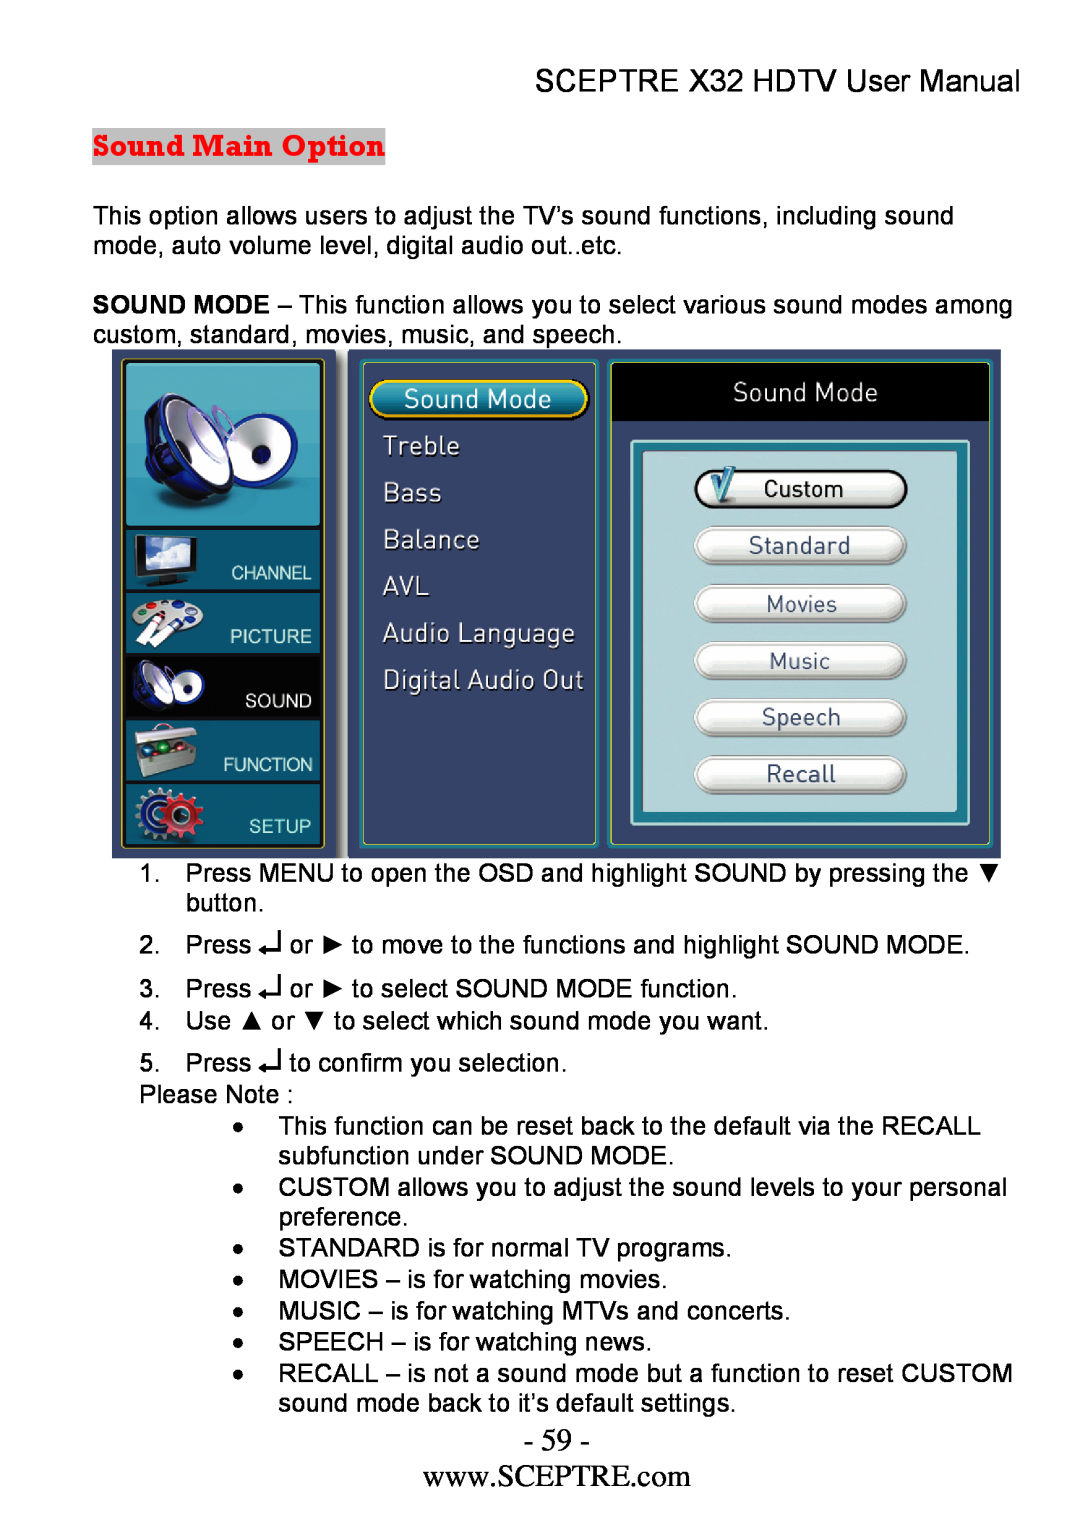 Sceptre Technologies x32 user manual Sound Main Option, SCEPTRE X32 HDTV User Manual 